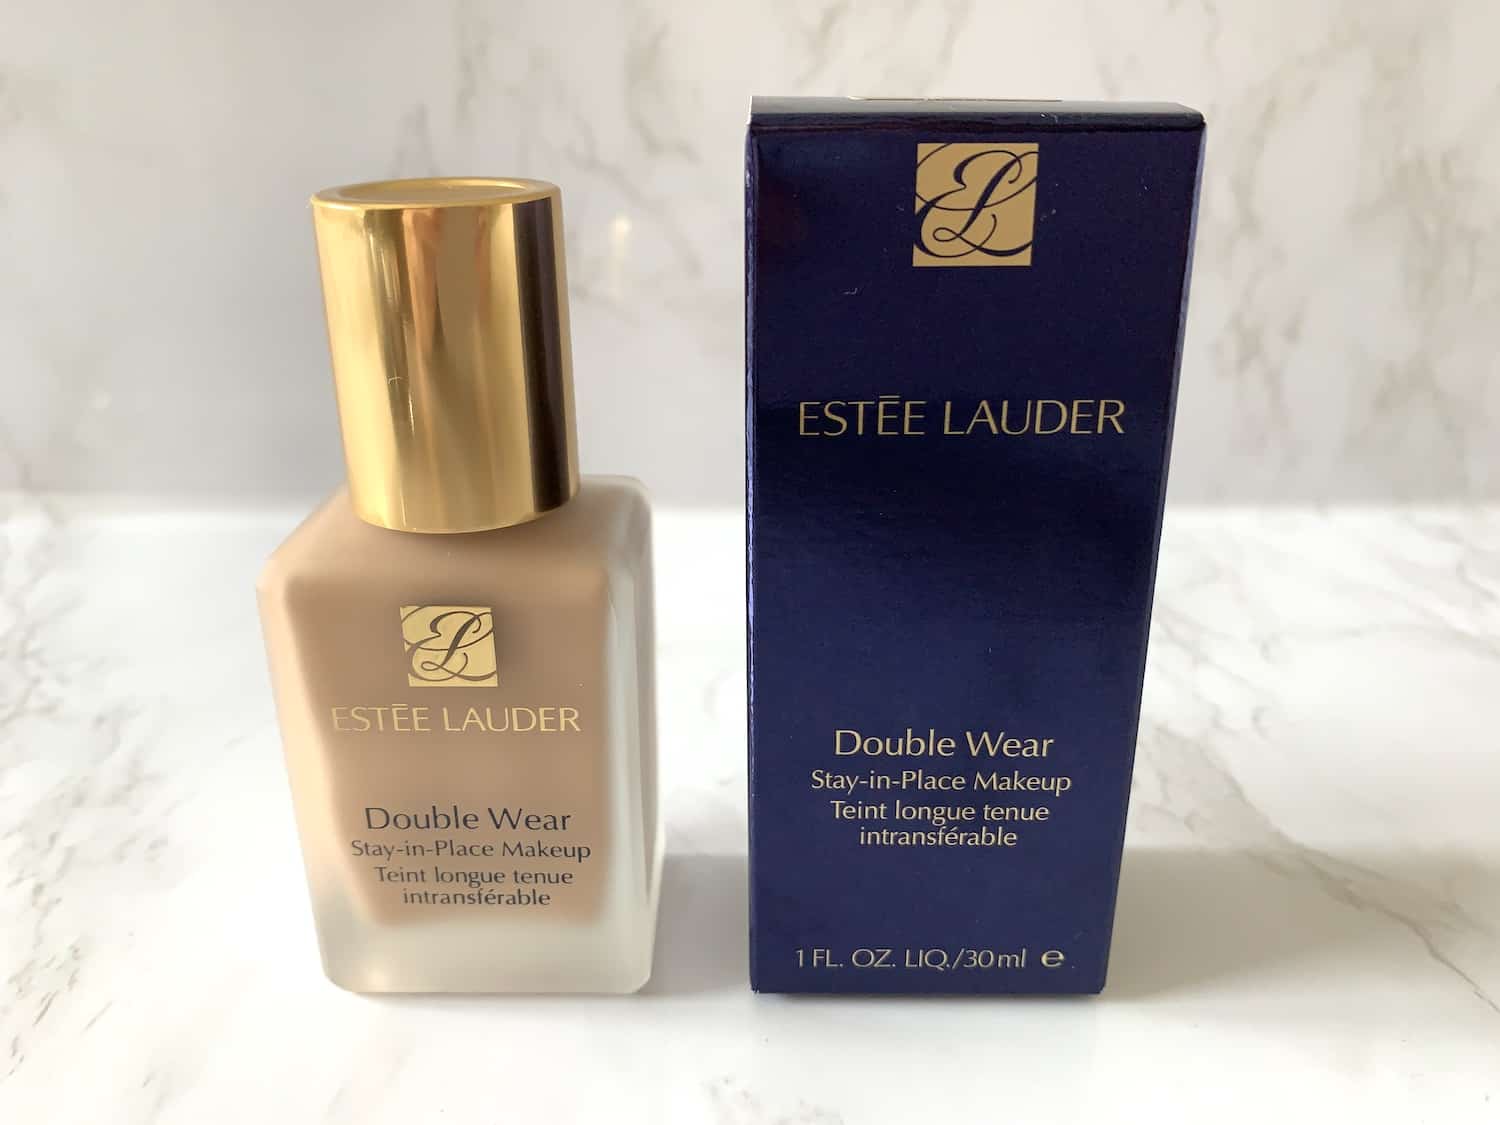 Estee Lauder Double Wear Foundation - Buynowpakistan